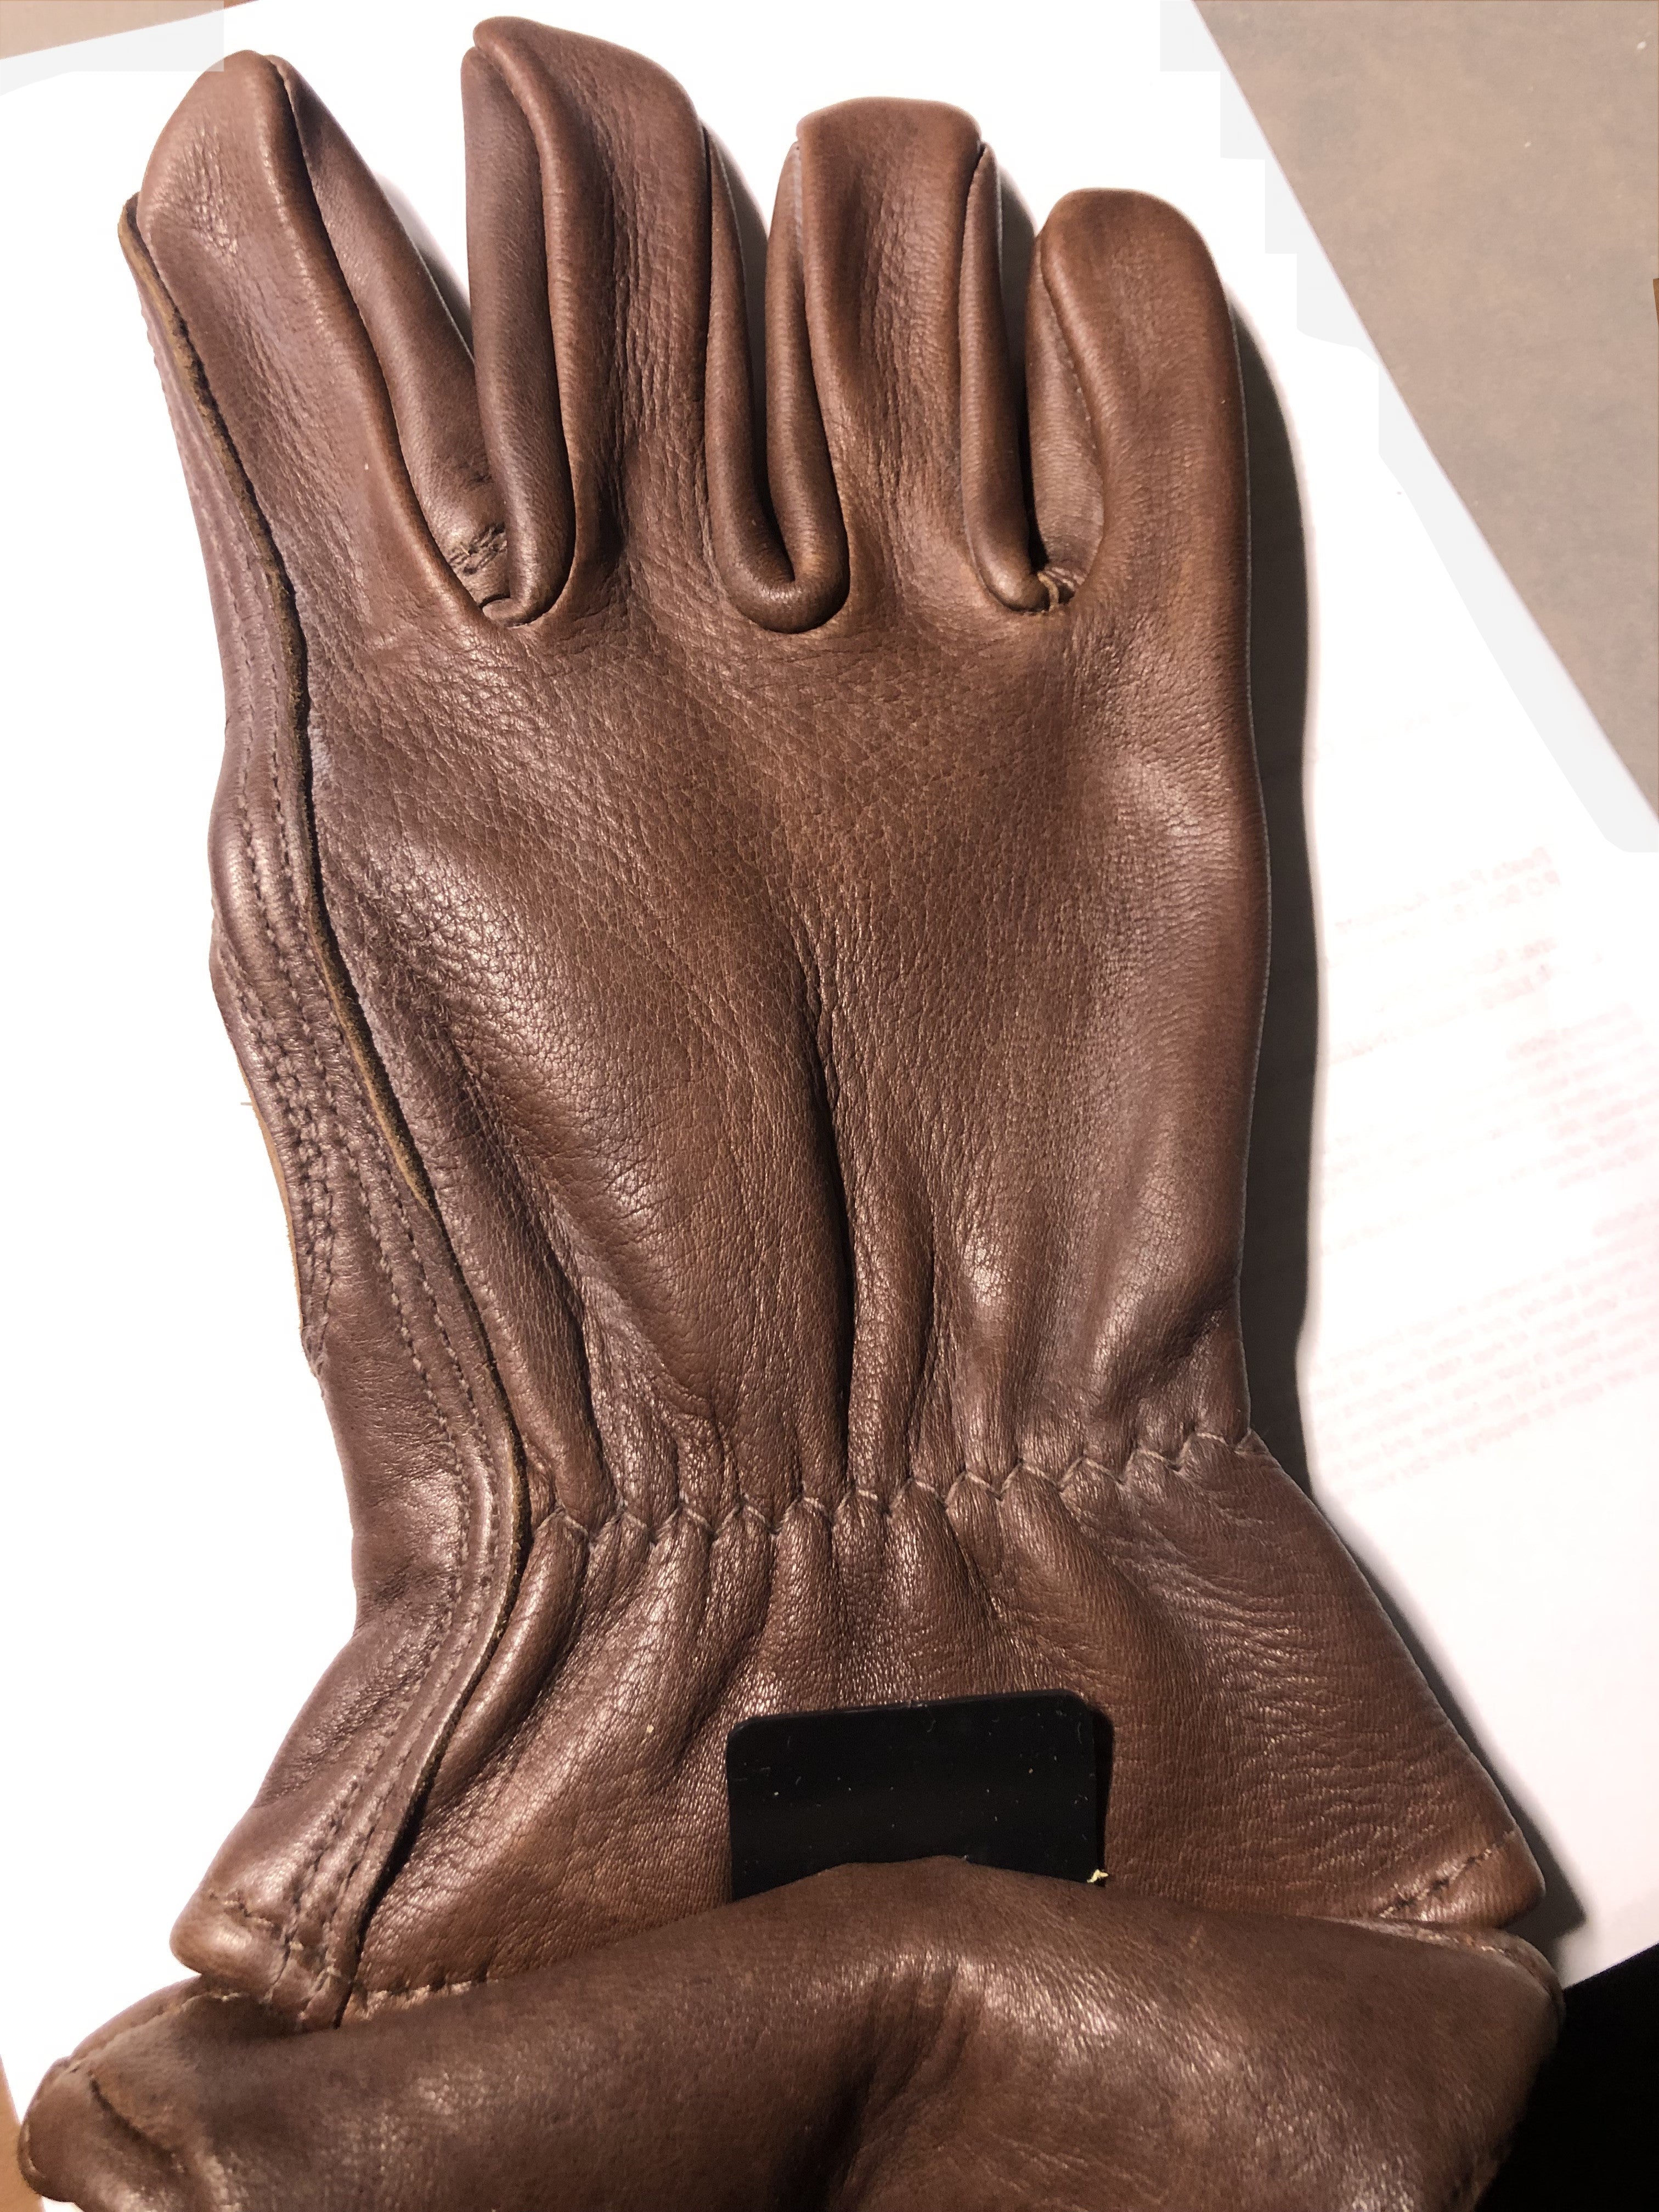 Midwest Glove = Buckskin "Keystone Thumb" leather gloves